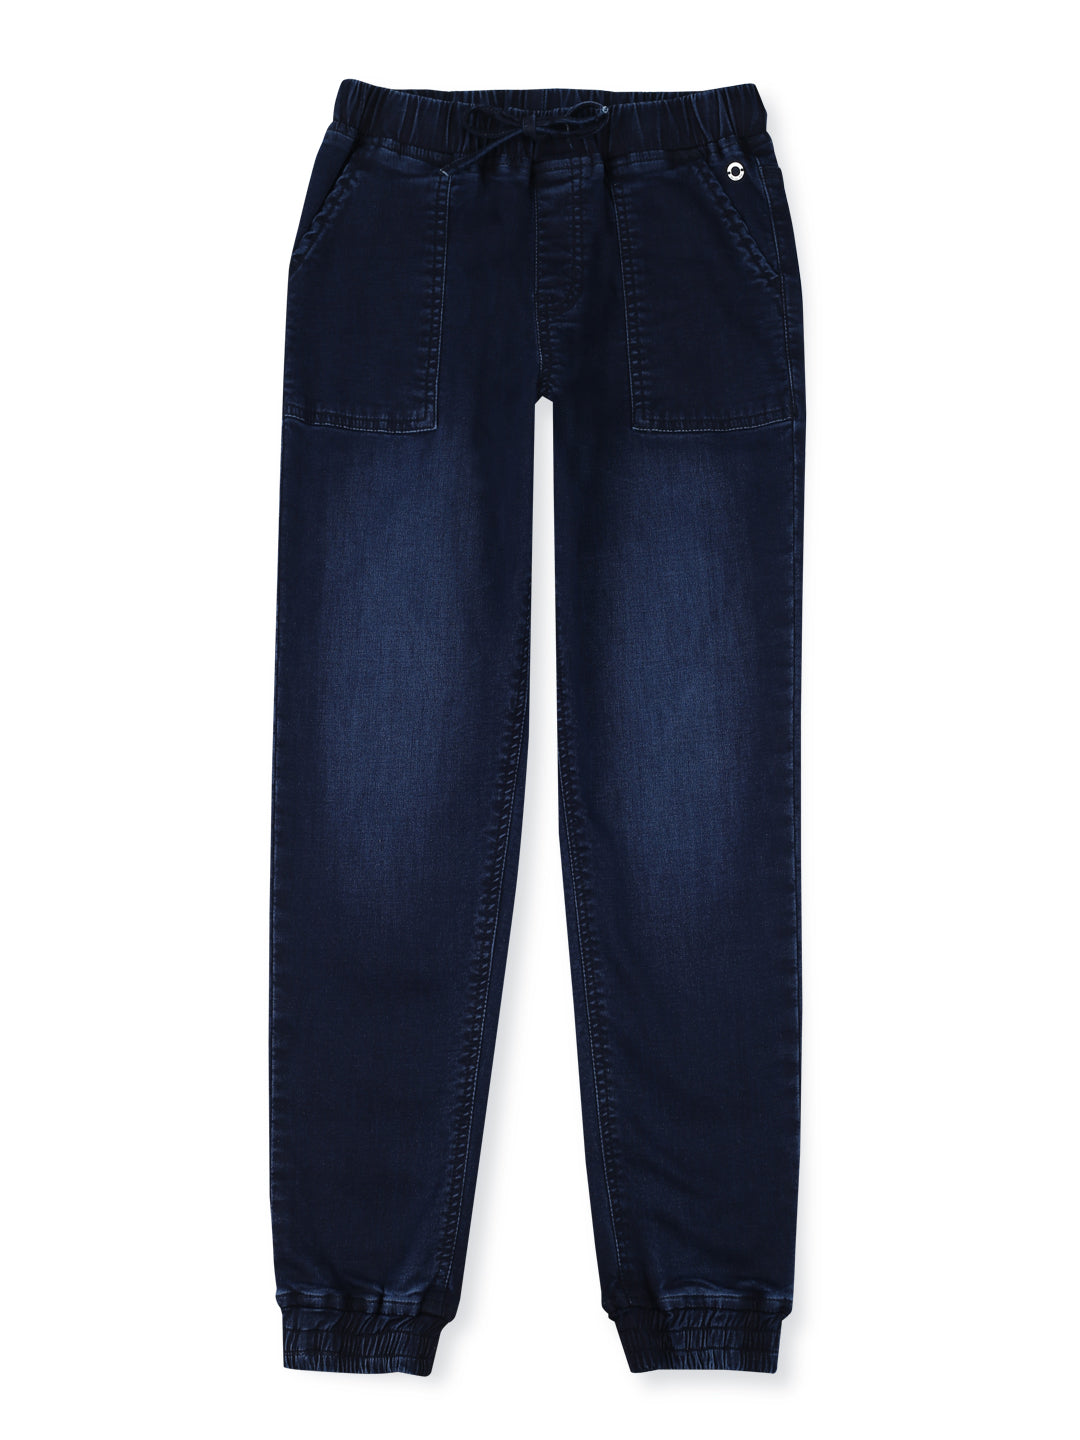 Girls Blue Cotton Denim Solid Jeans